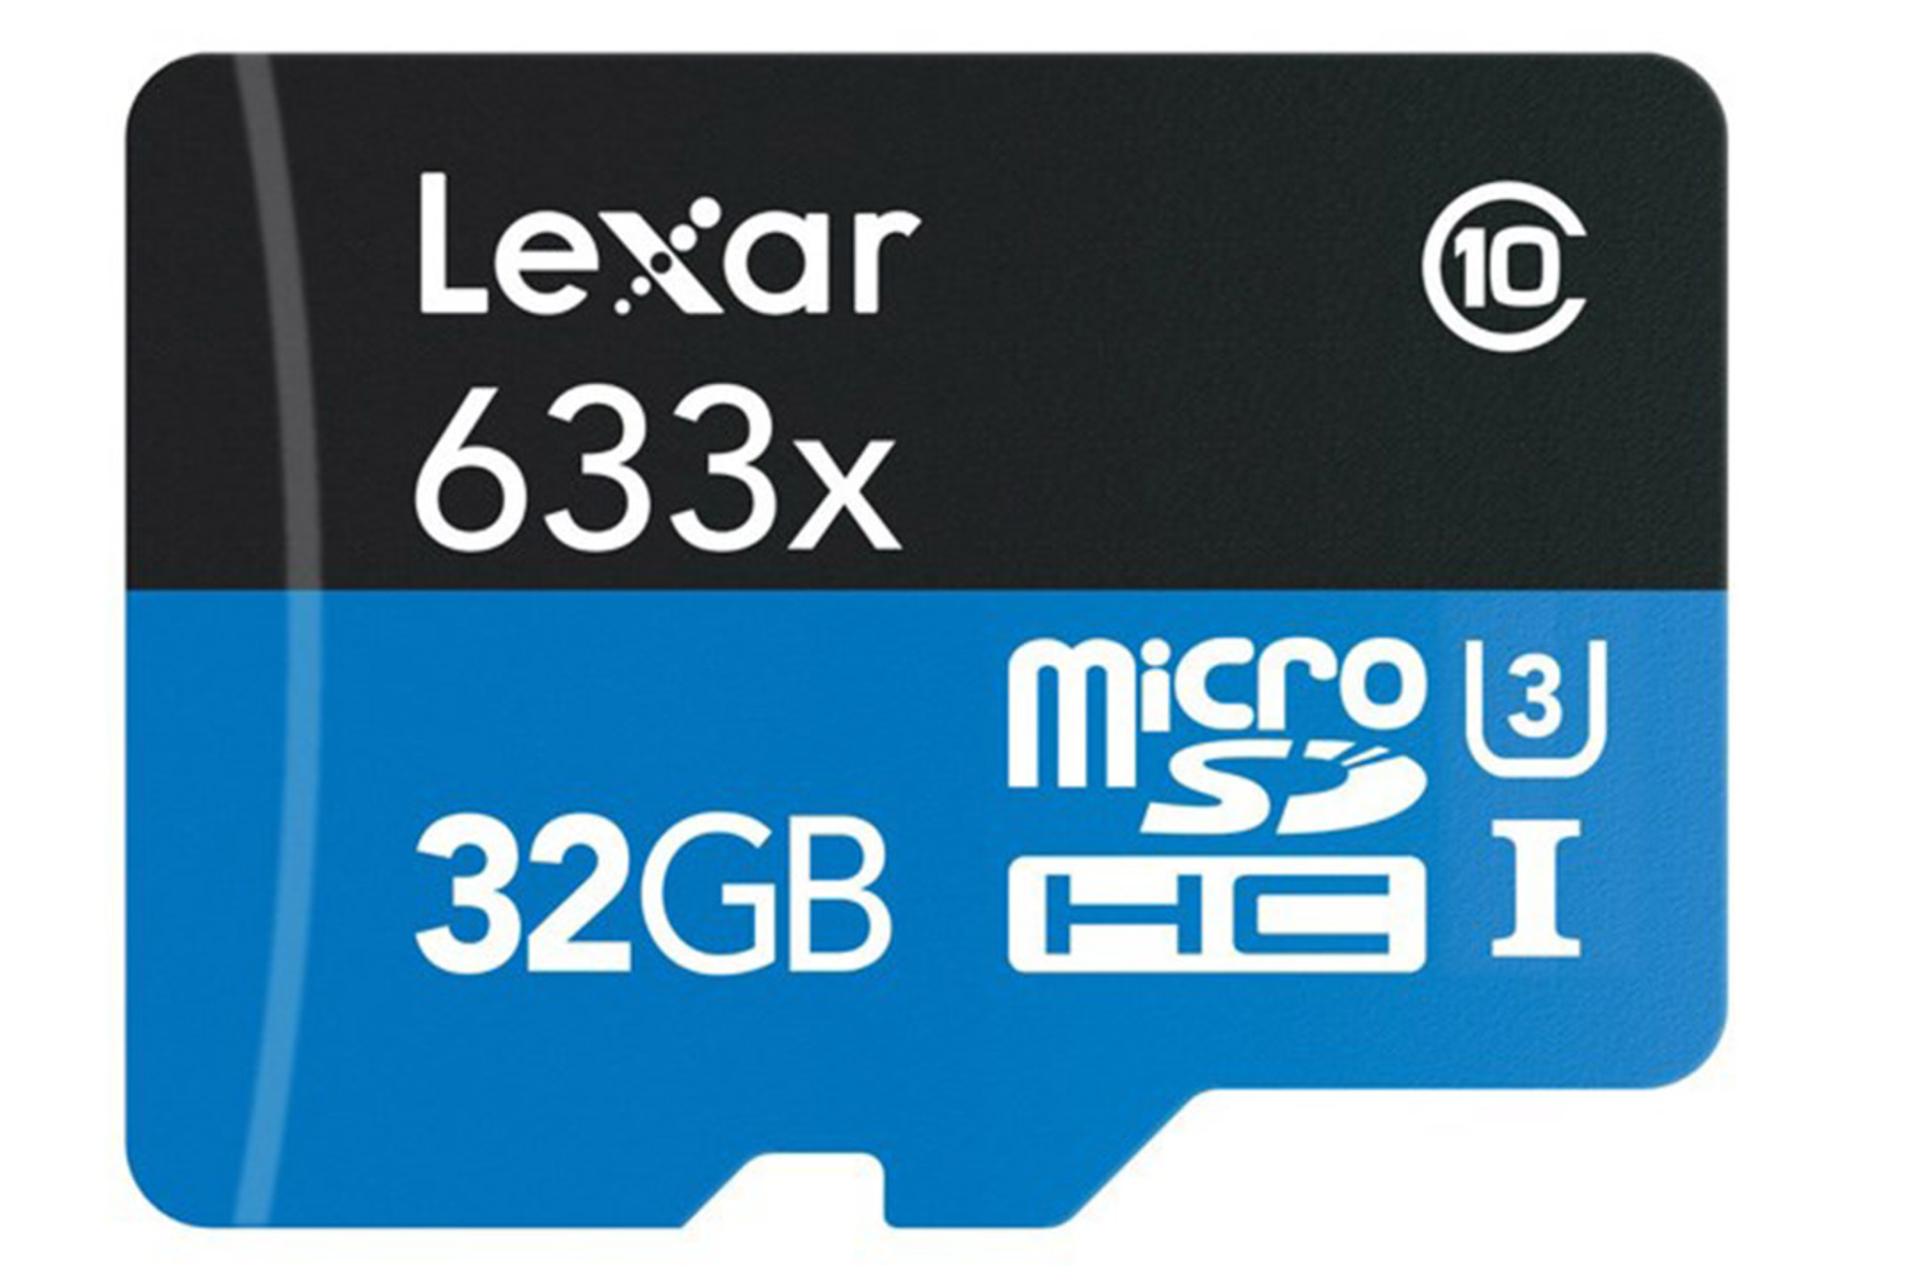 Lexar High Performance microSDHC Class 10 UHS-I U3 32GB